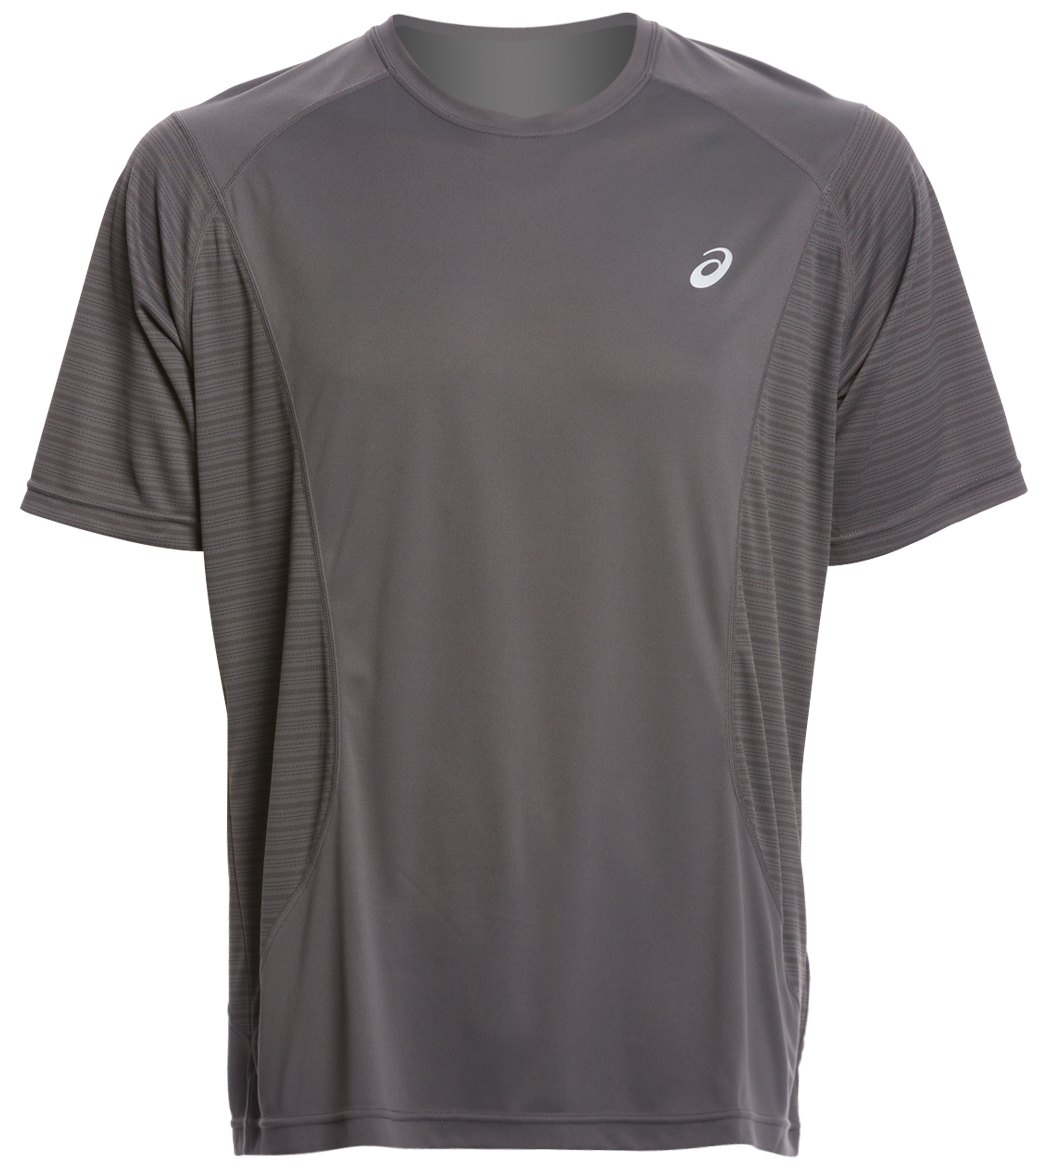 Asics Men's Favorite Printed Short Sleeve Shirt - Iron Gate Small Polyester - Swimoutlet.com